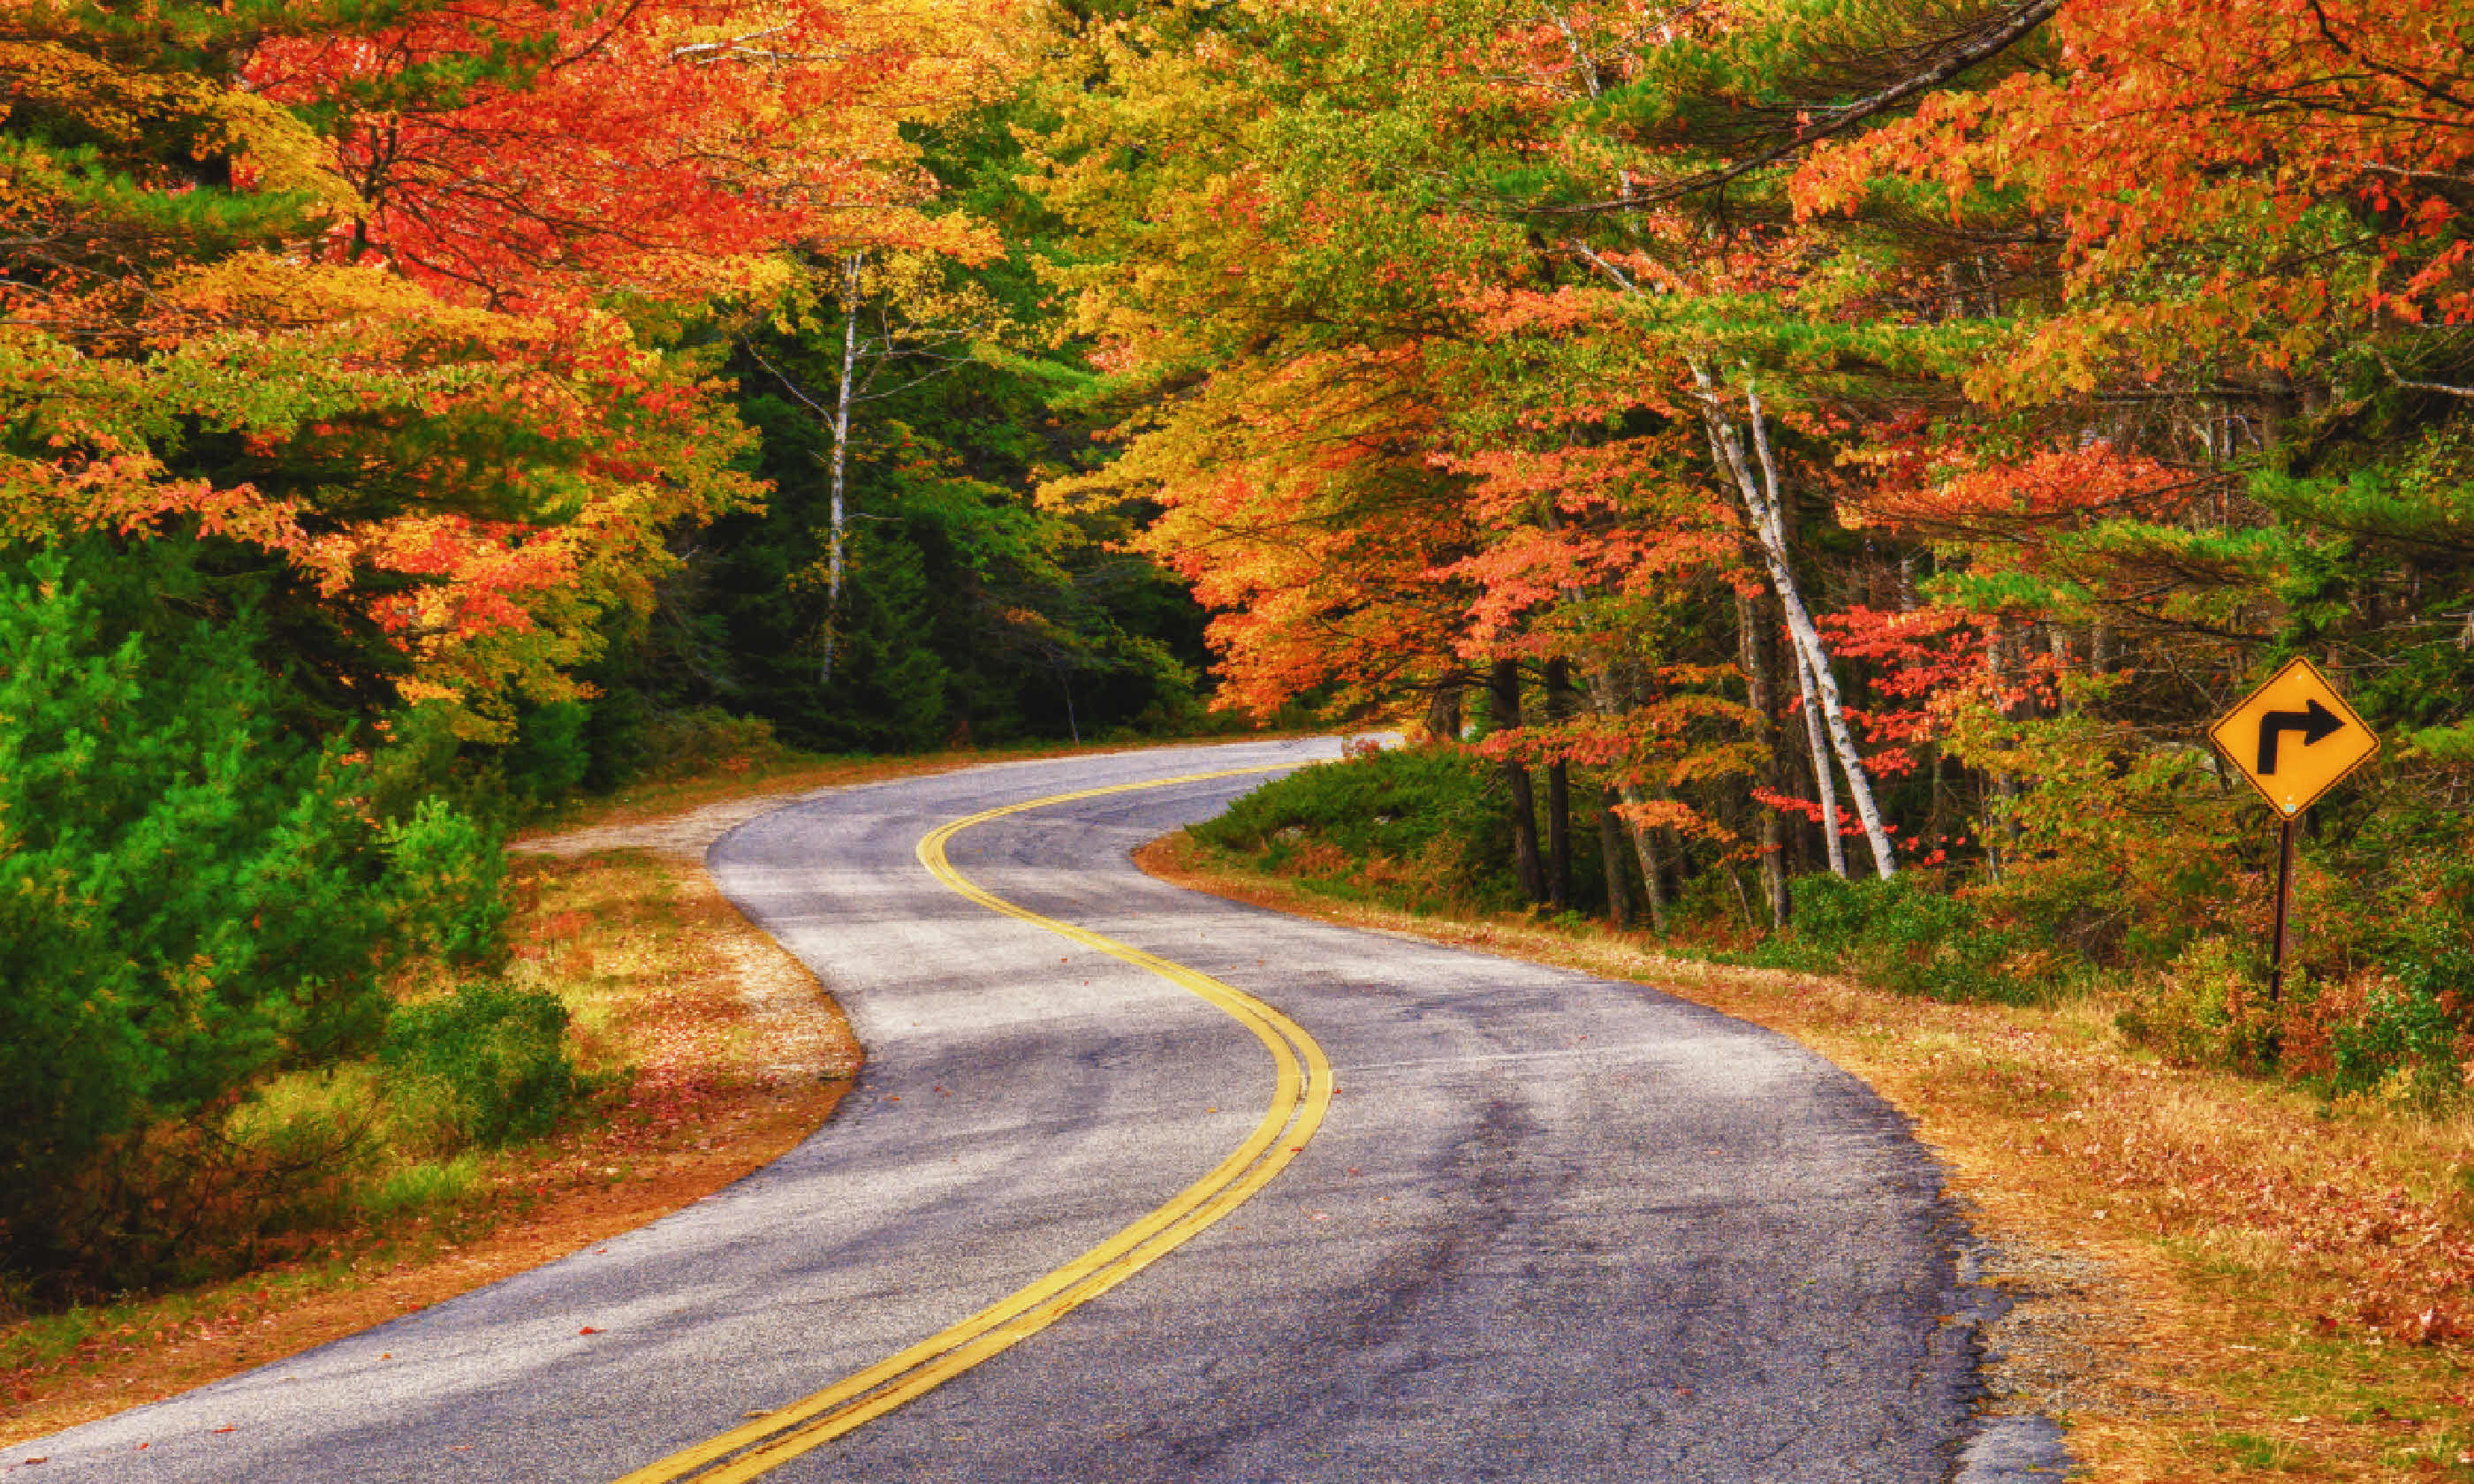 Autumn in New England (Shutterstock)